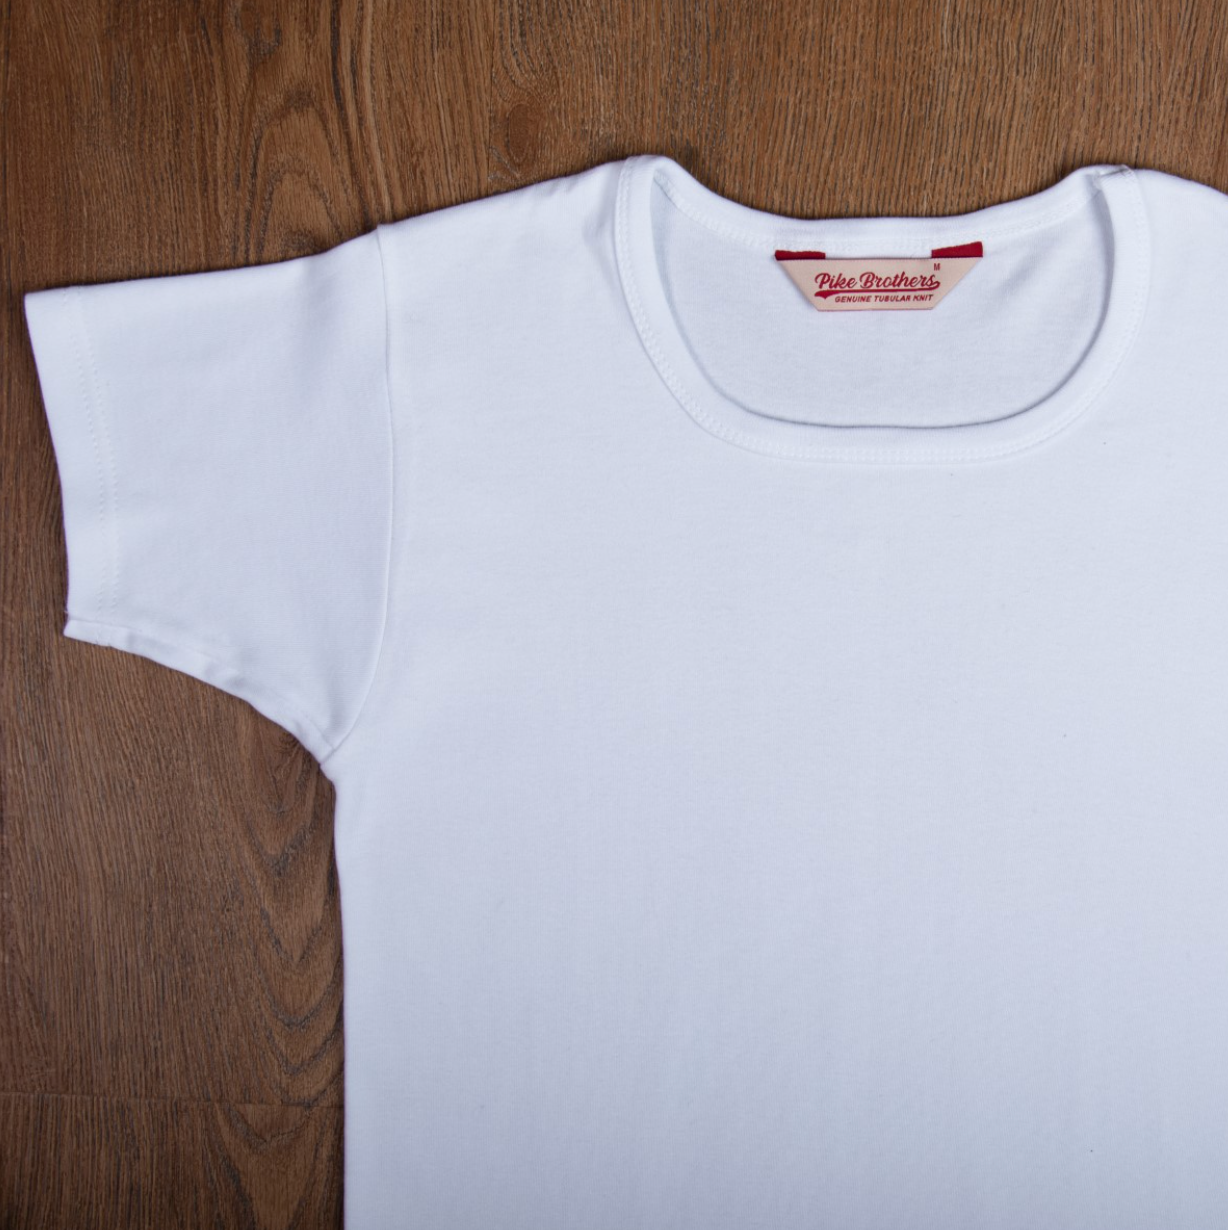 Pike Brothers Round Neck White Premium T-Shirts - 2 Box Set , T-Shirts, Pike Brothers, Working Title